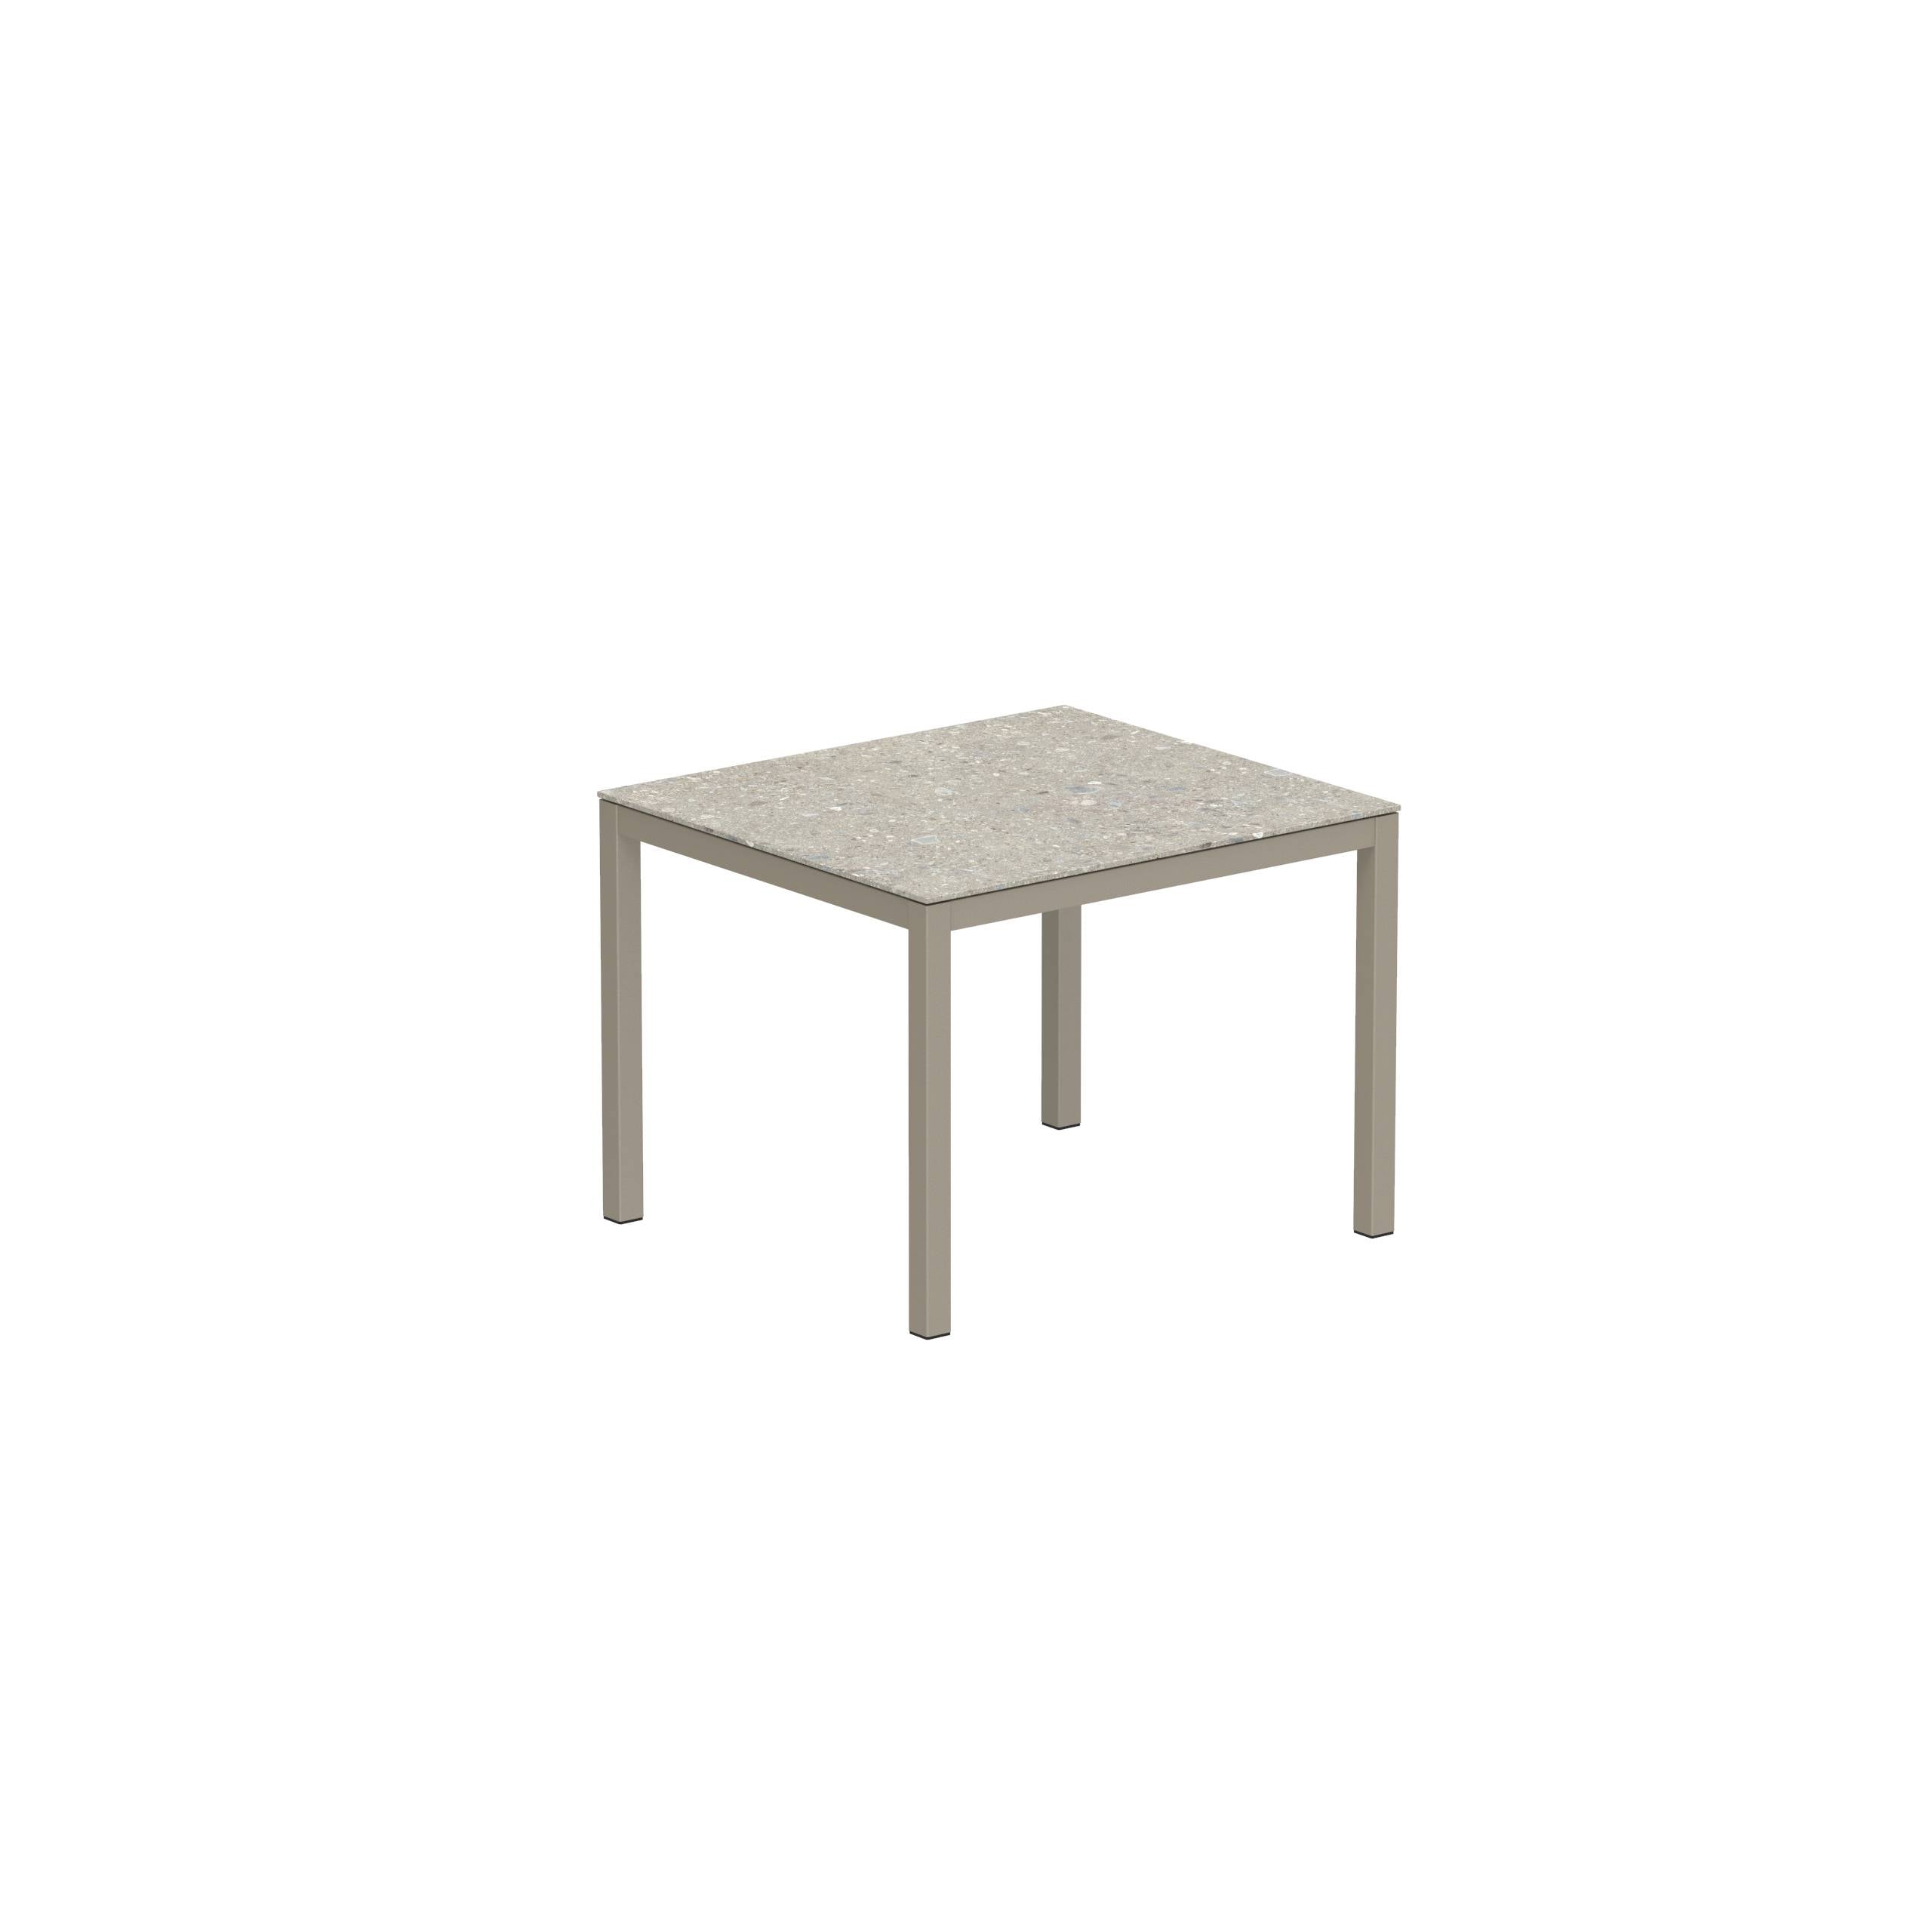 Taboela Table 100x90cm Sand With Ceramic Top Ceppo Dolomitica